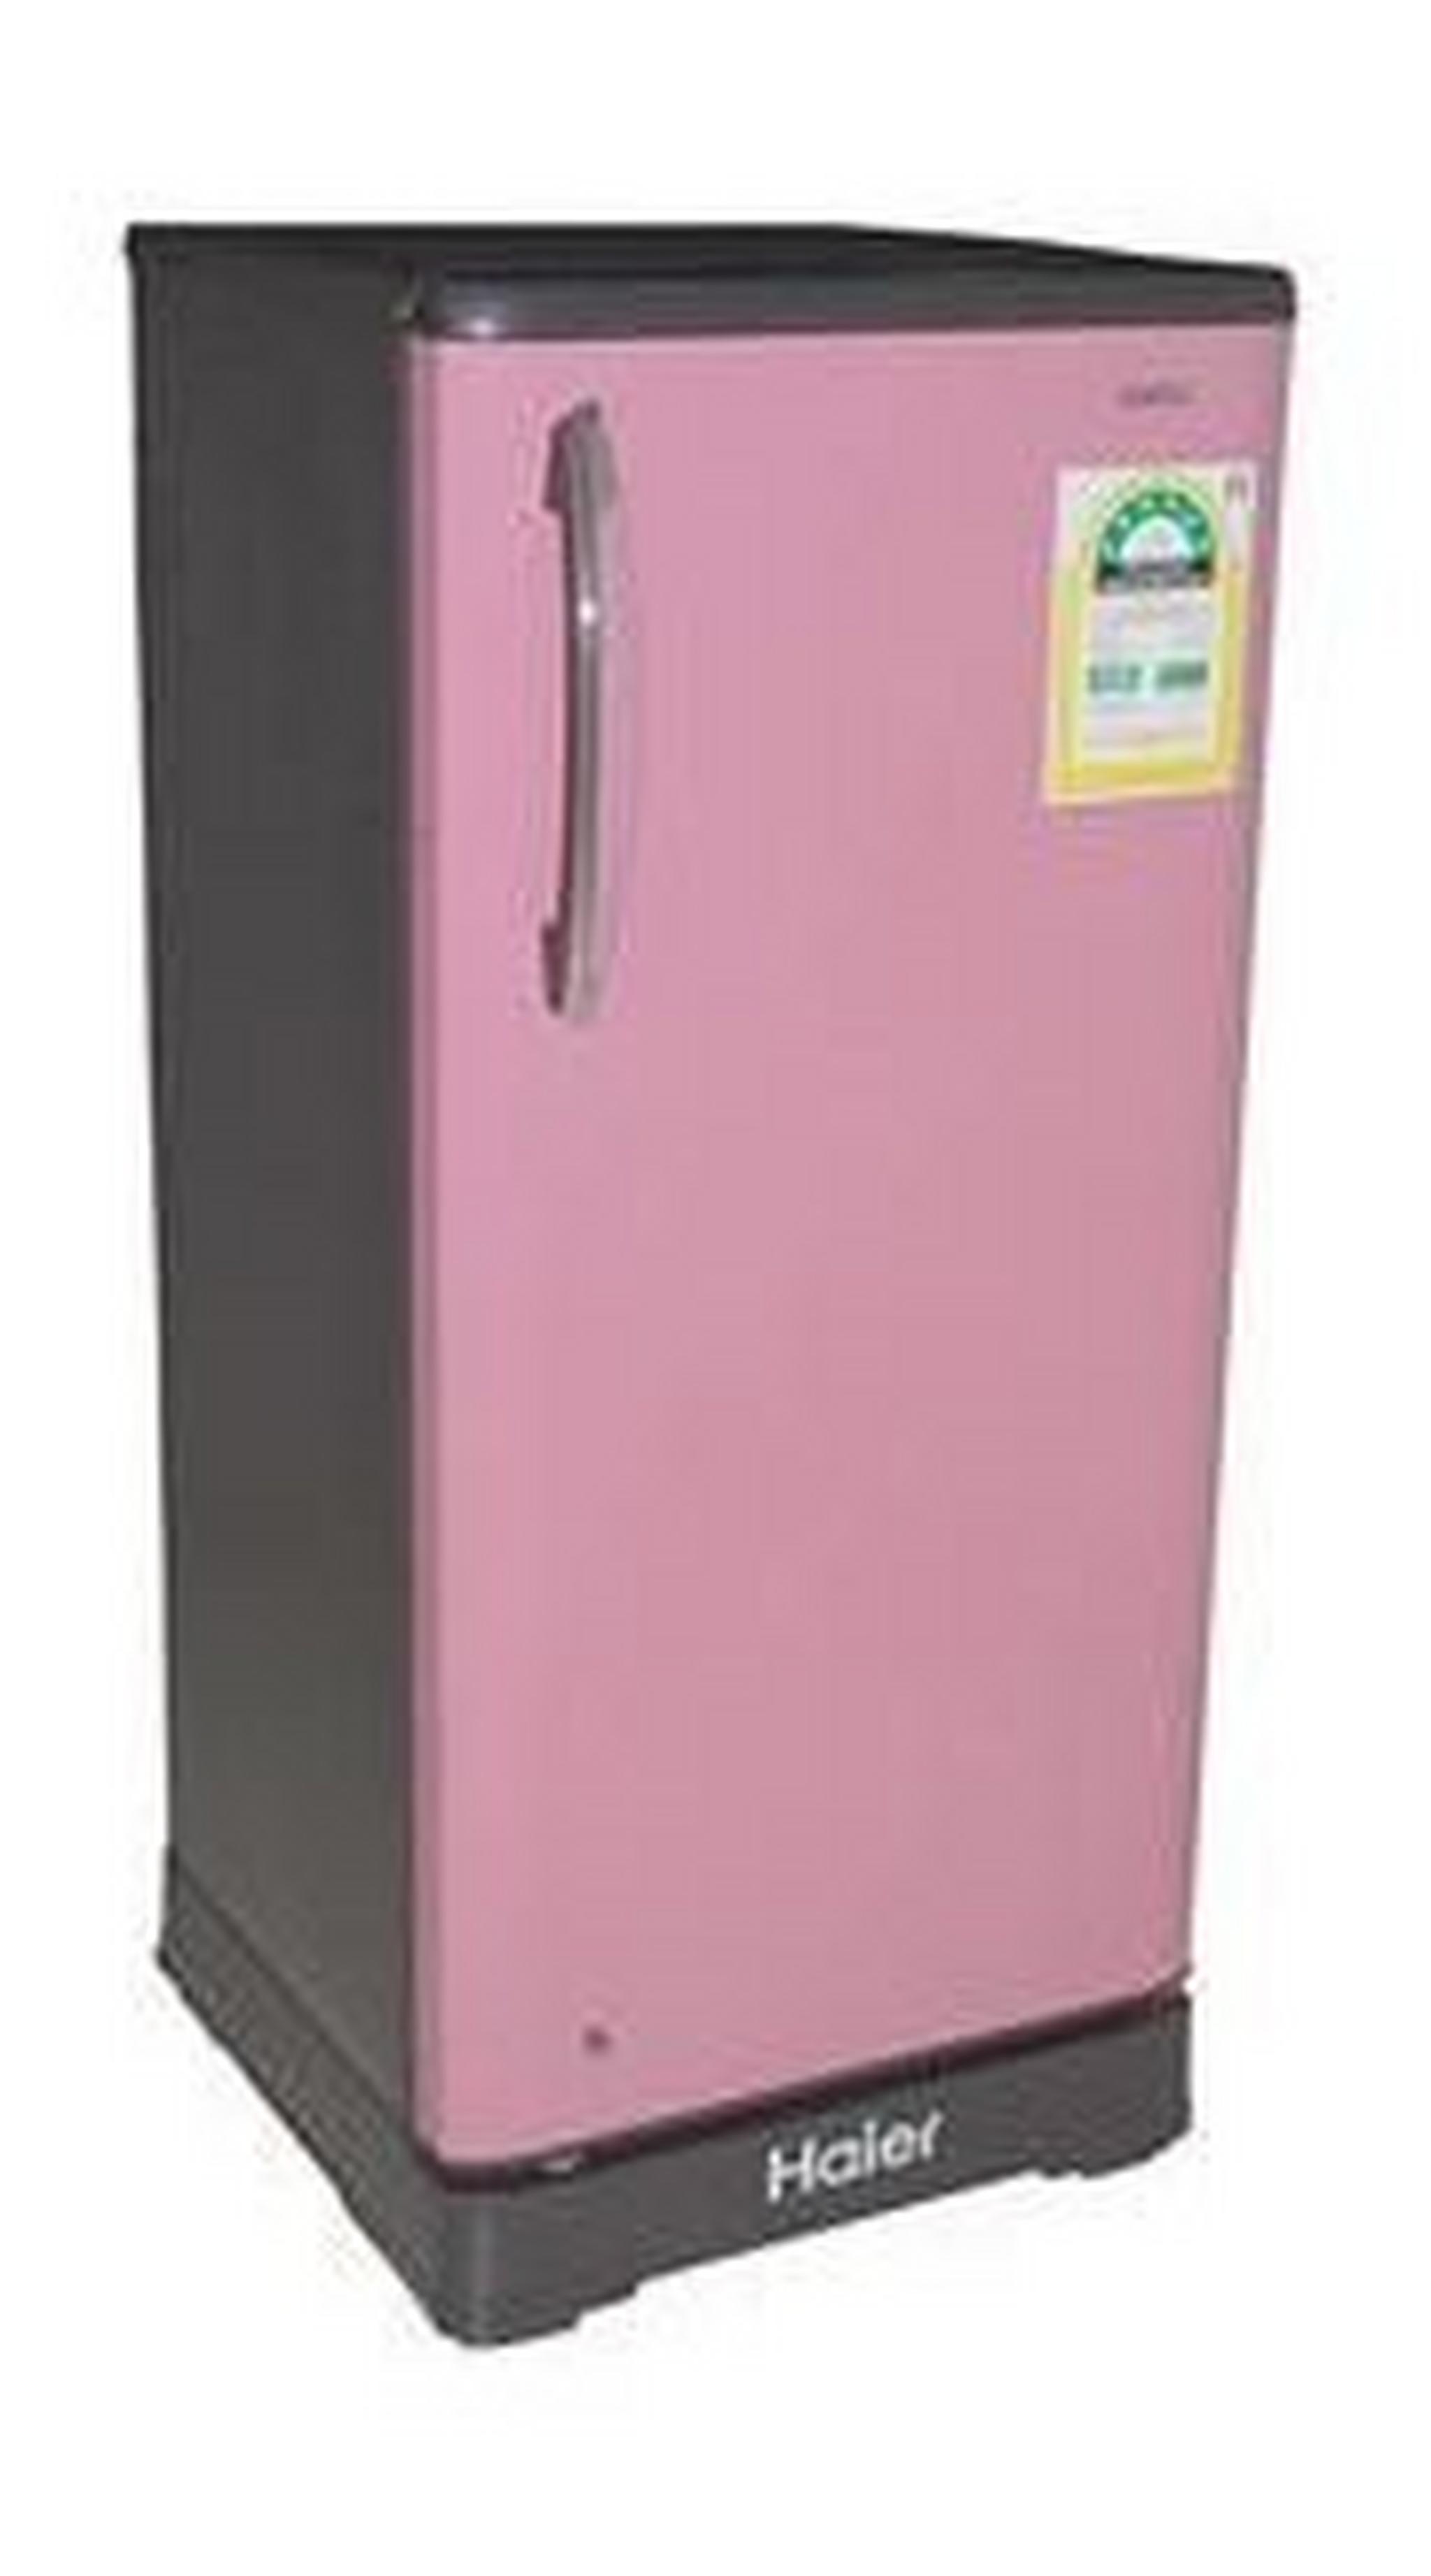 Haier 6 Cubic Feet Single Door Refrigerator - Pink (HR-210CKB P)